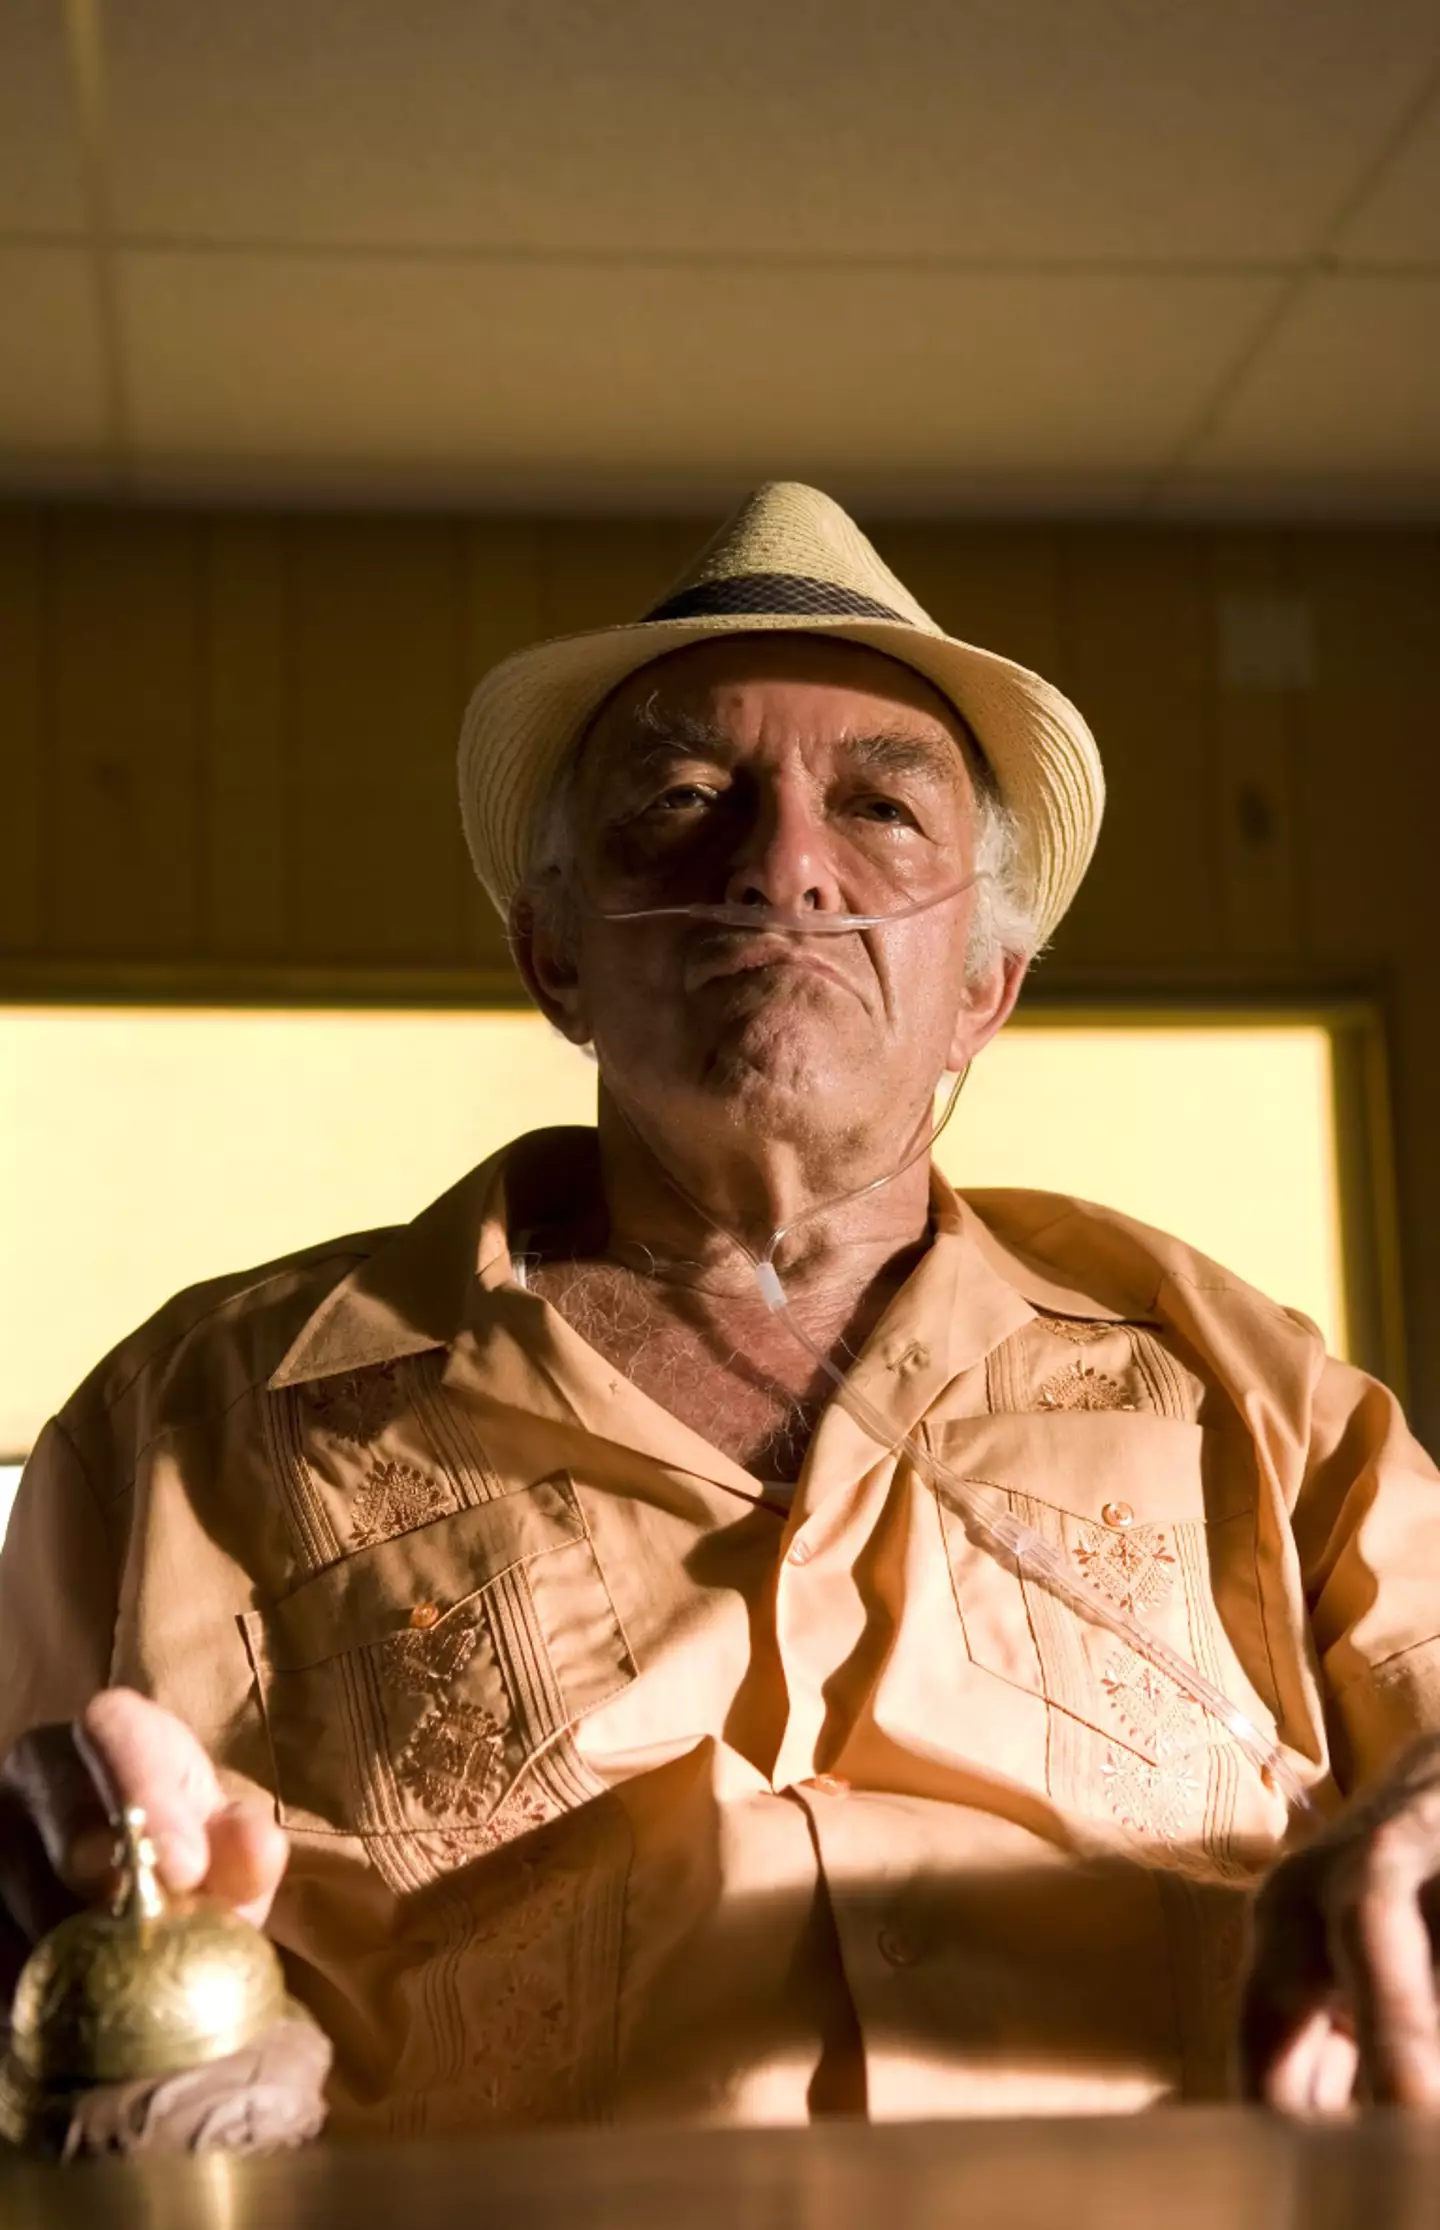 Margolis played Hector Salamanca in series 2 of Breaking Bad.